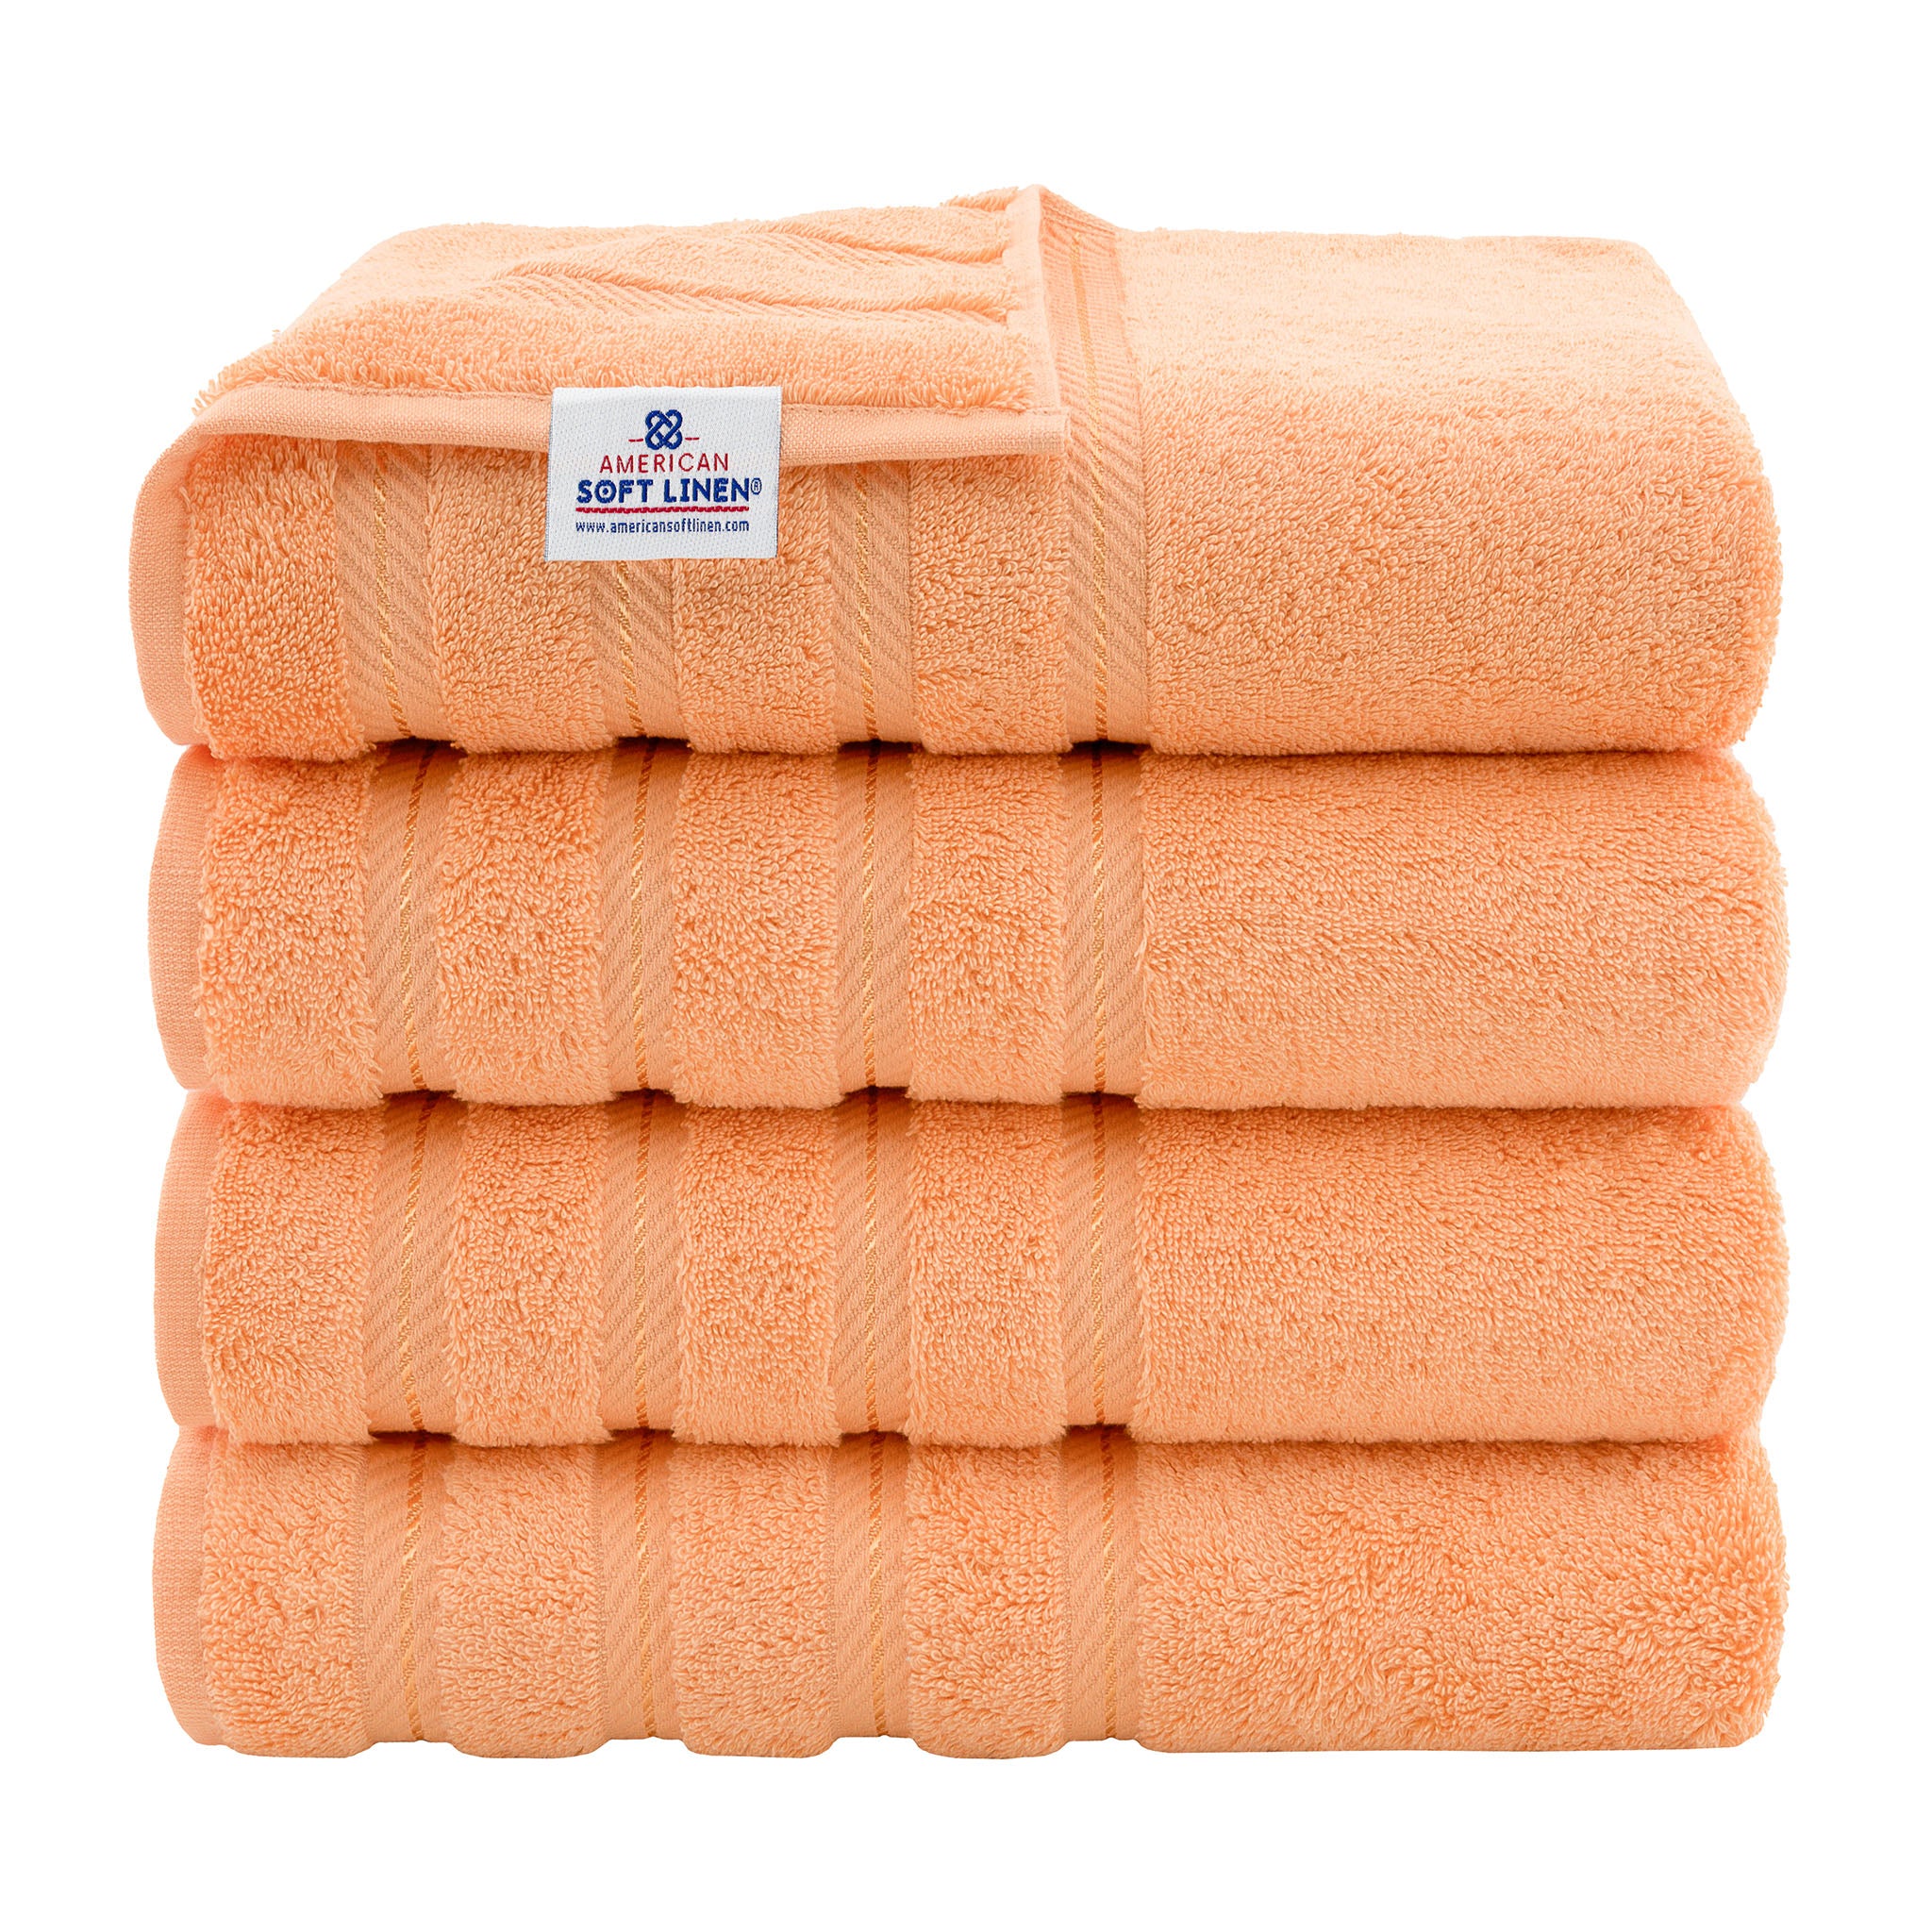 American Soft Linen 100% Turkish Cotton 4 Pack Bath Towel Set malibu-peach-1